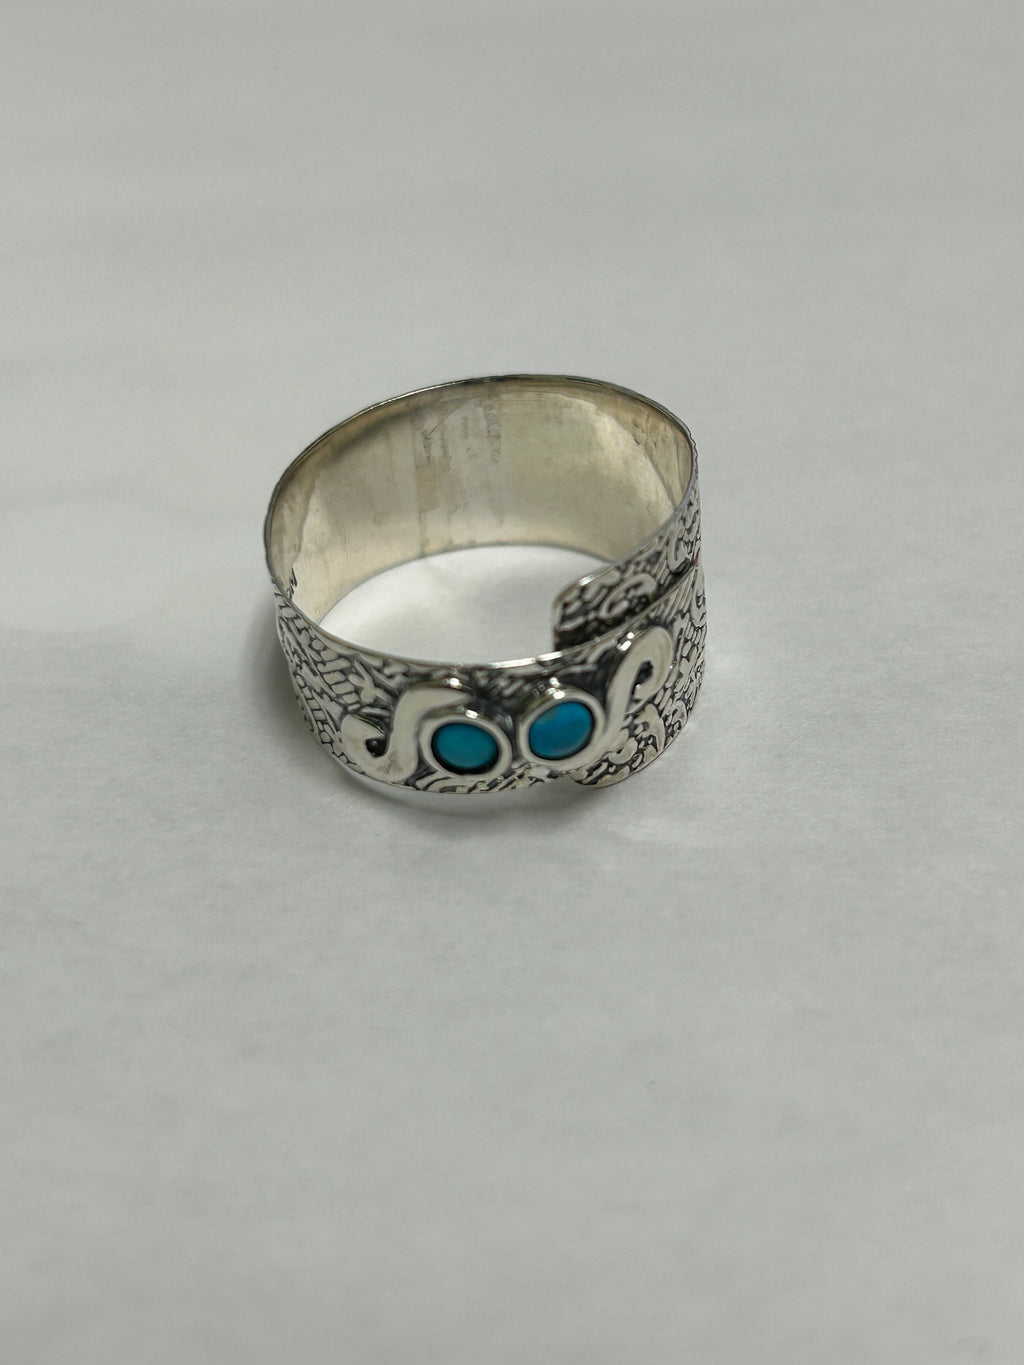 Turquoise Ring $65 - Lighten Up Shop